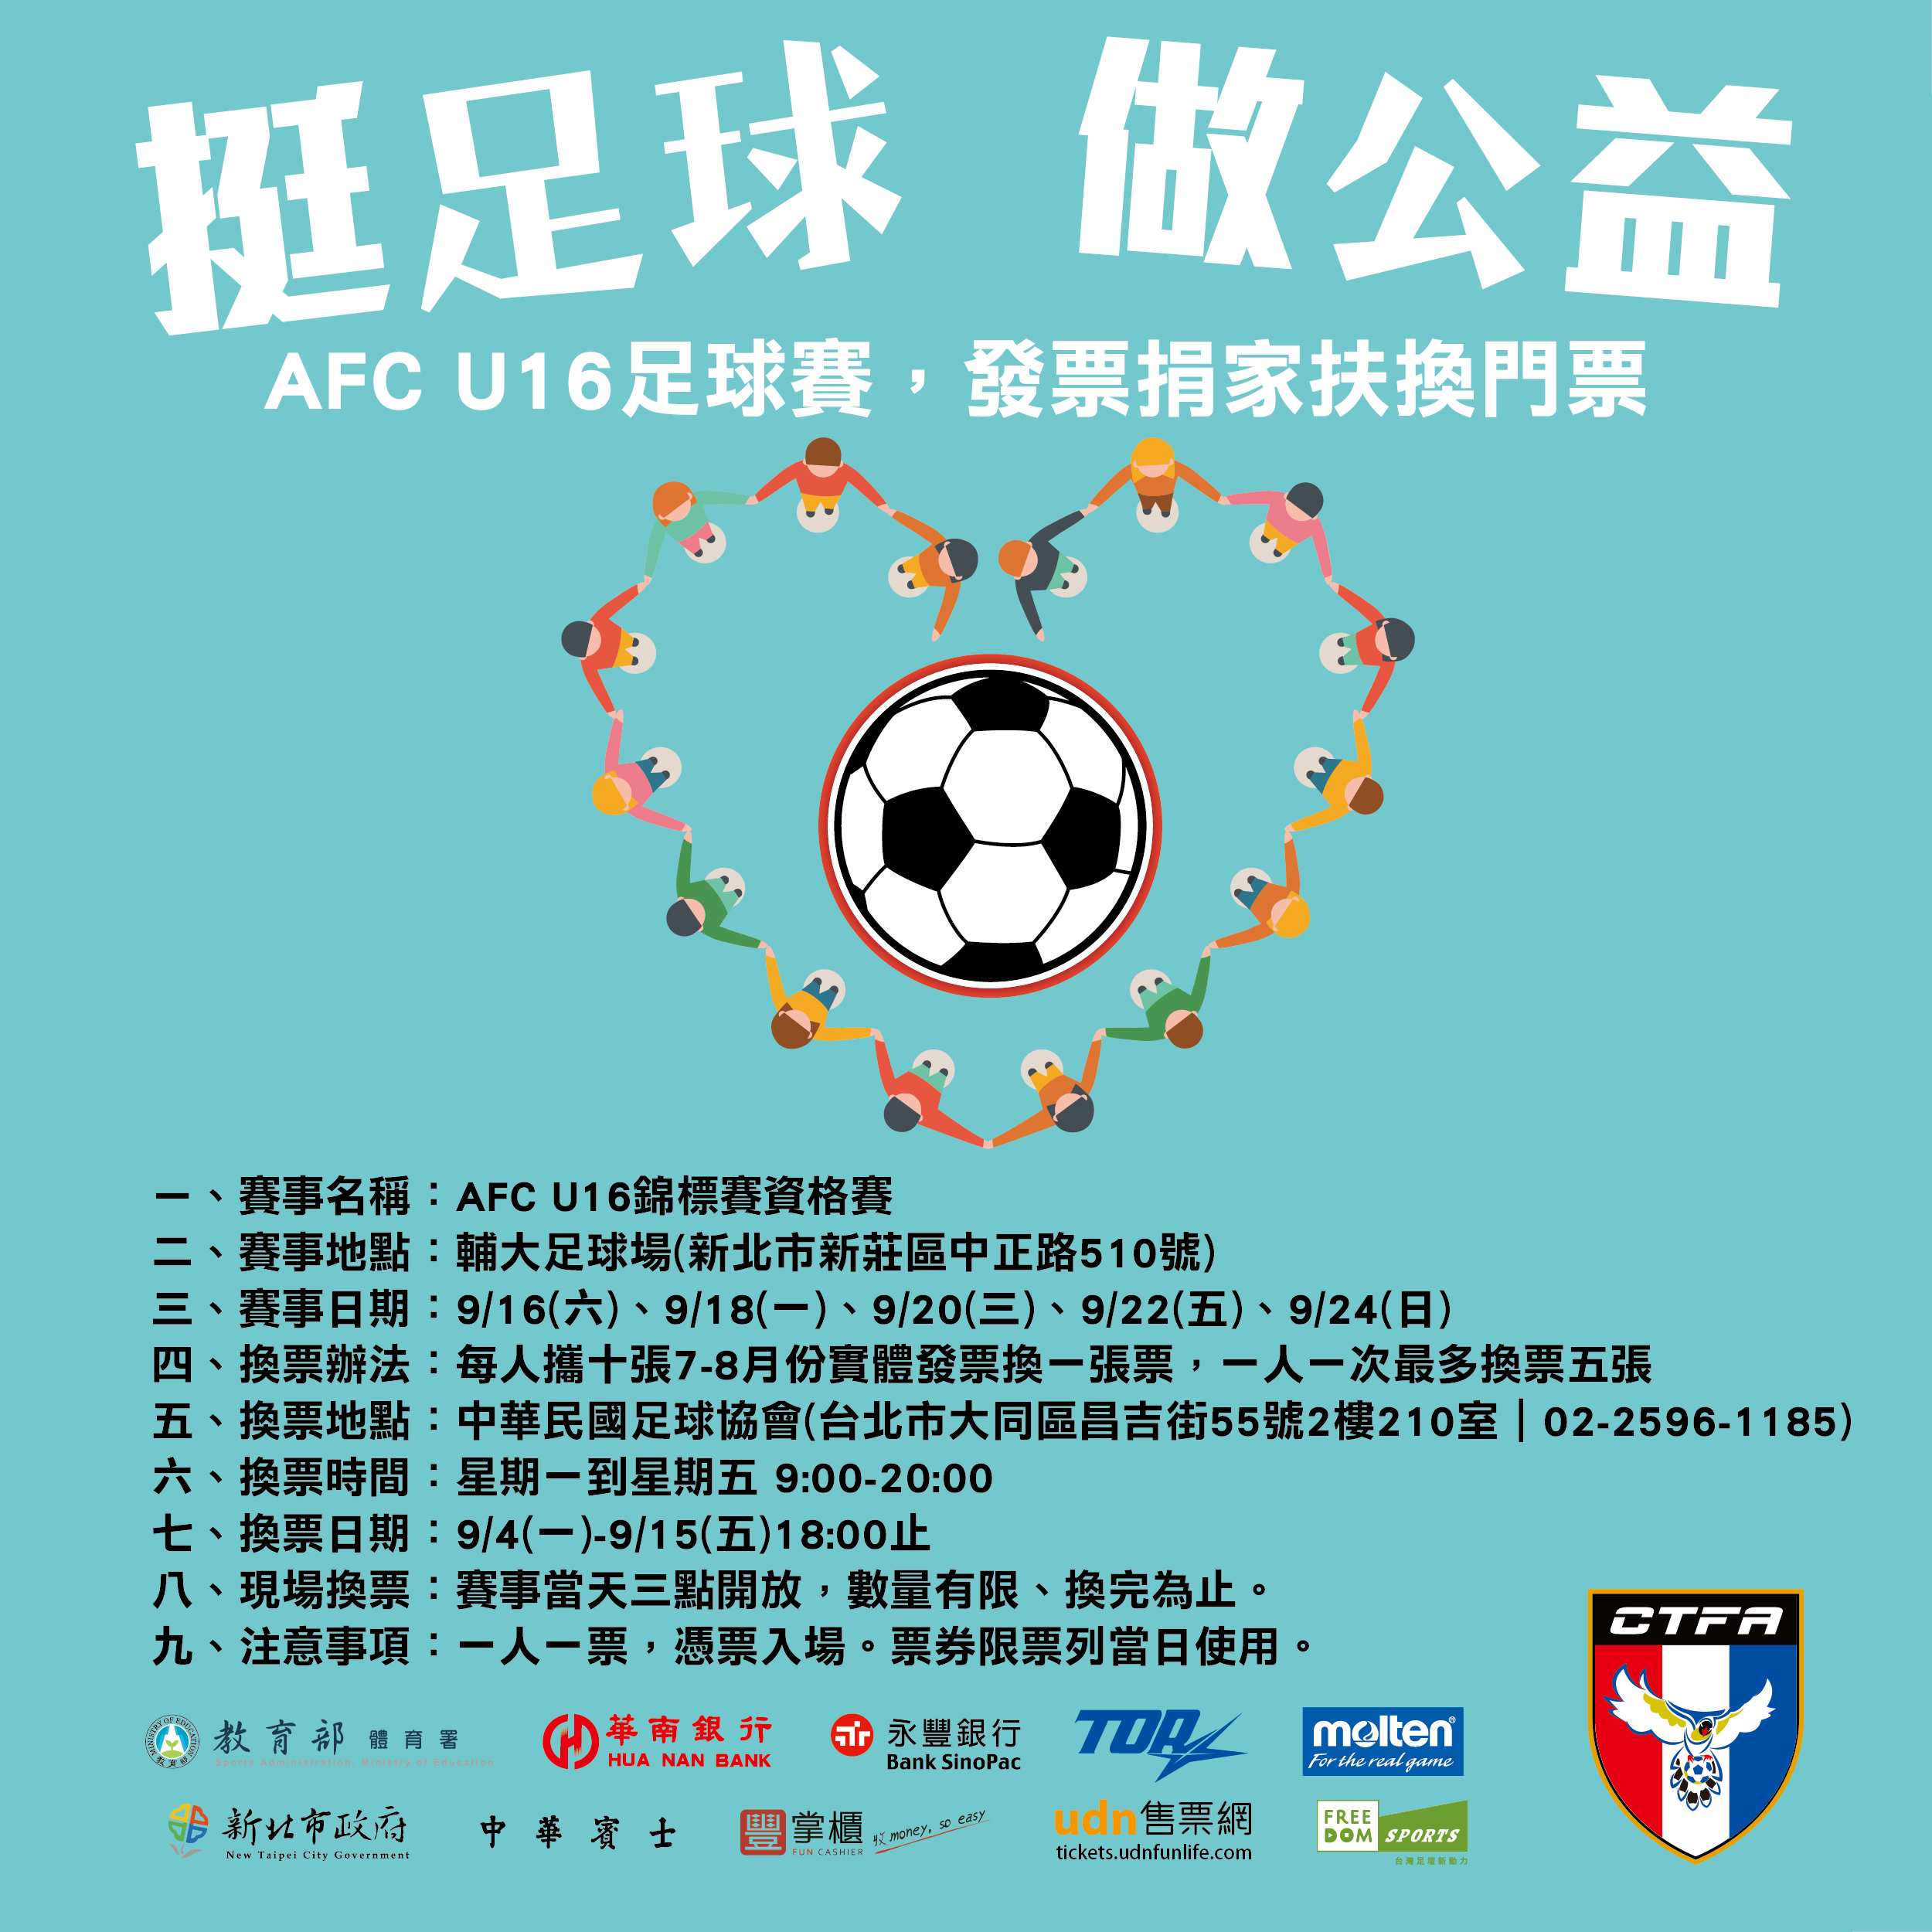 AFC U16 Championship 2018資格賽